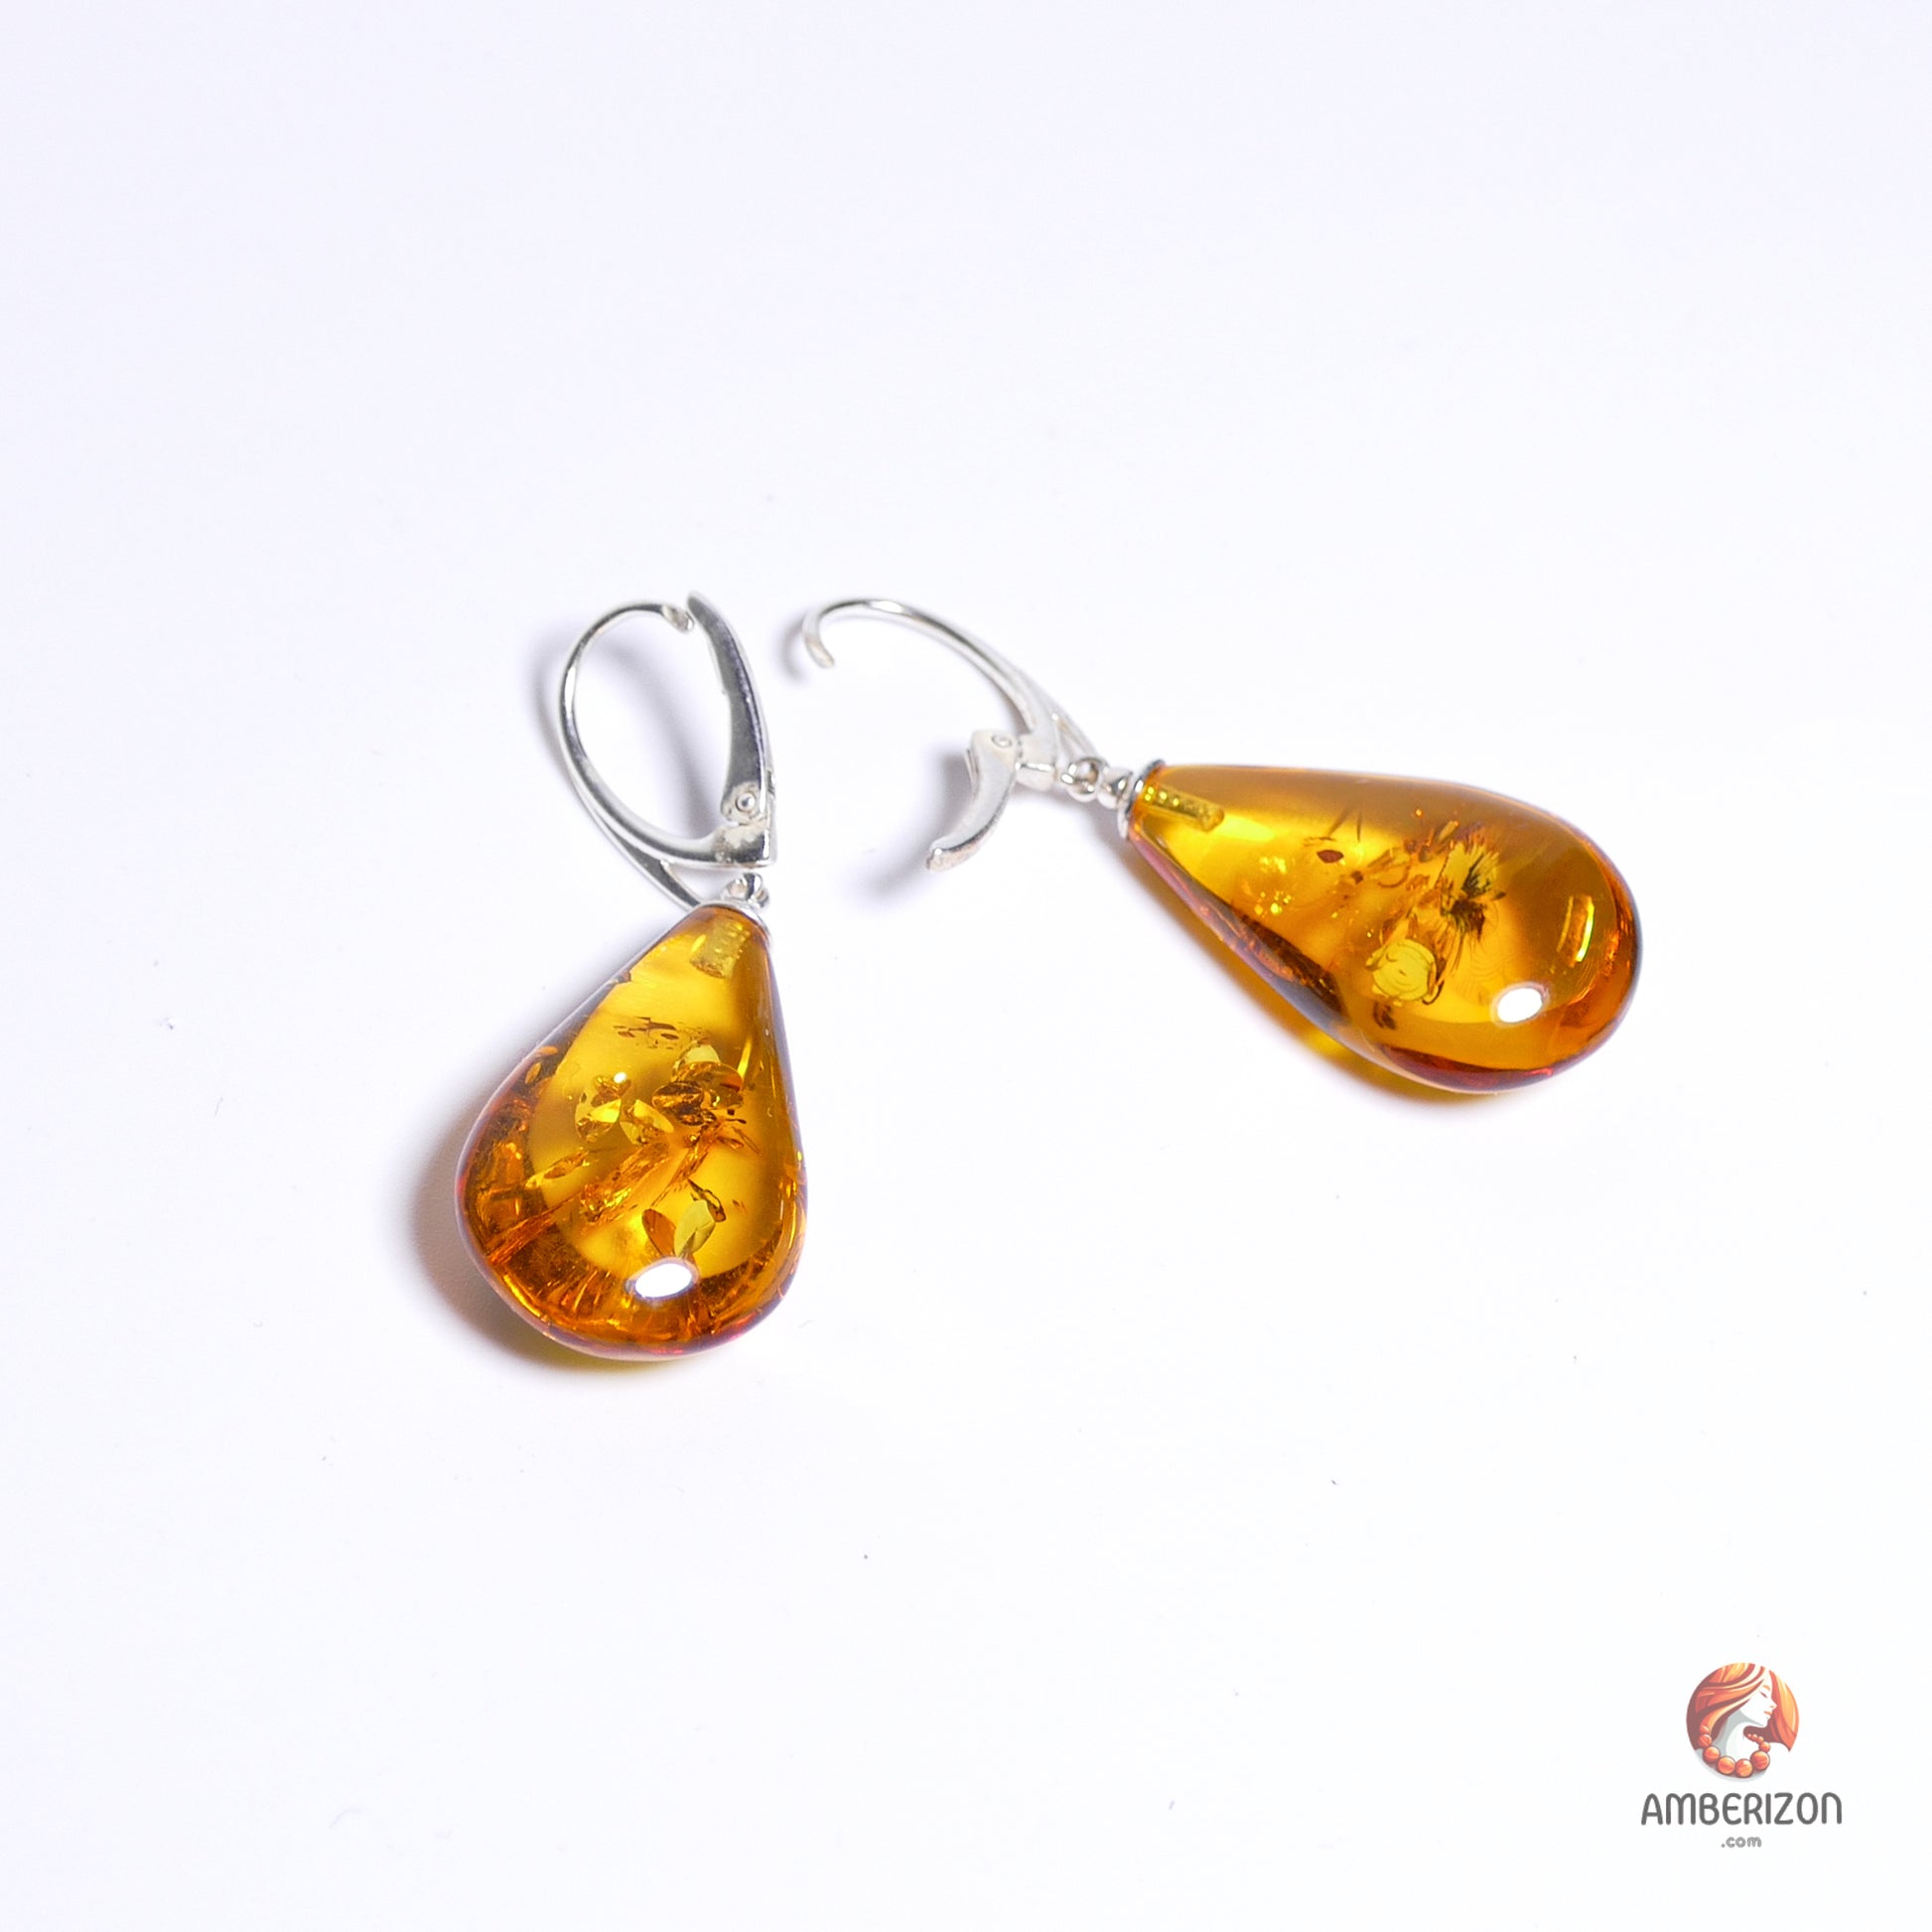 Baltic amber earrings - Honey drops